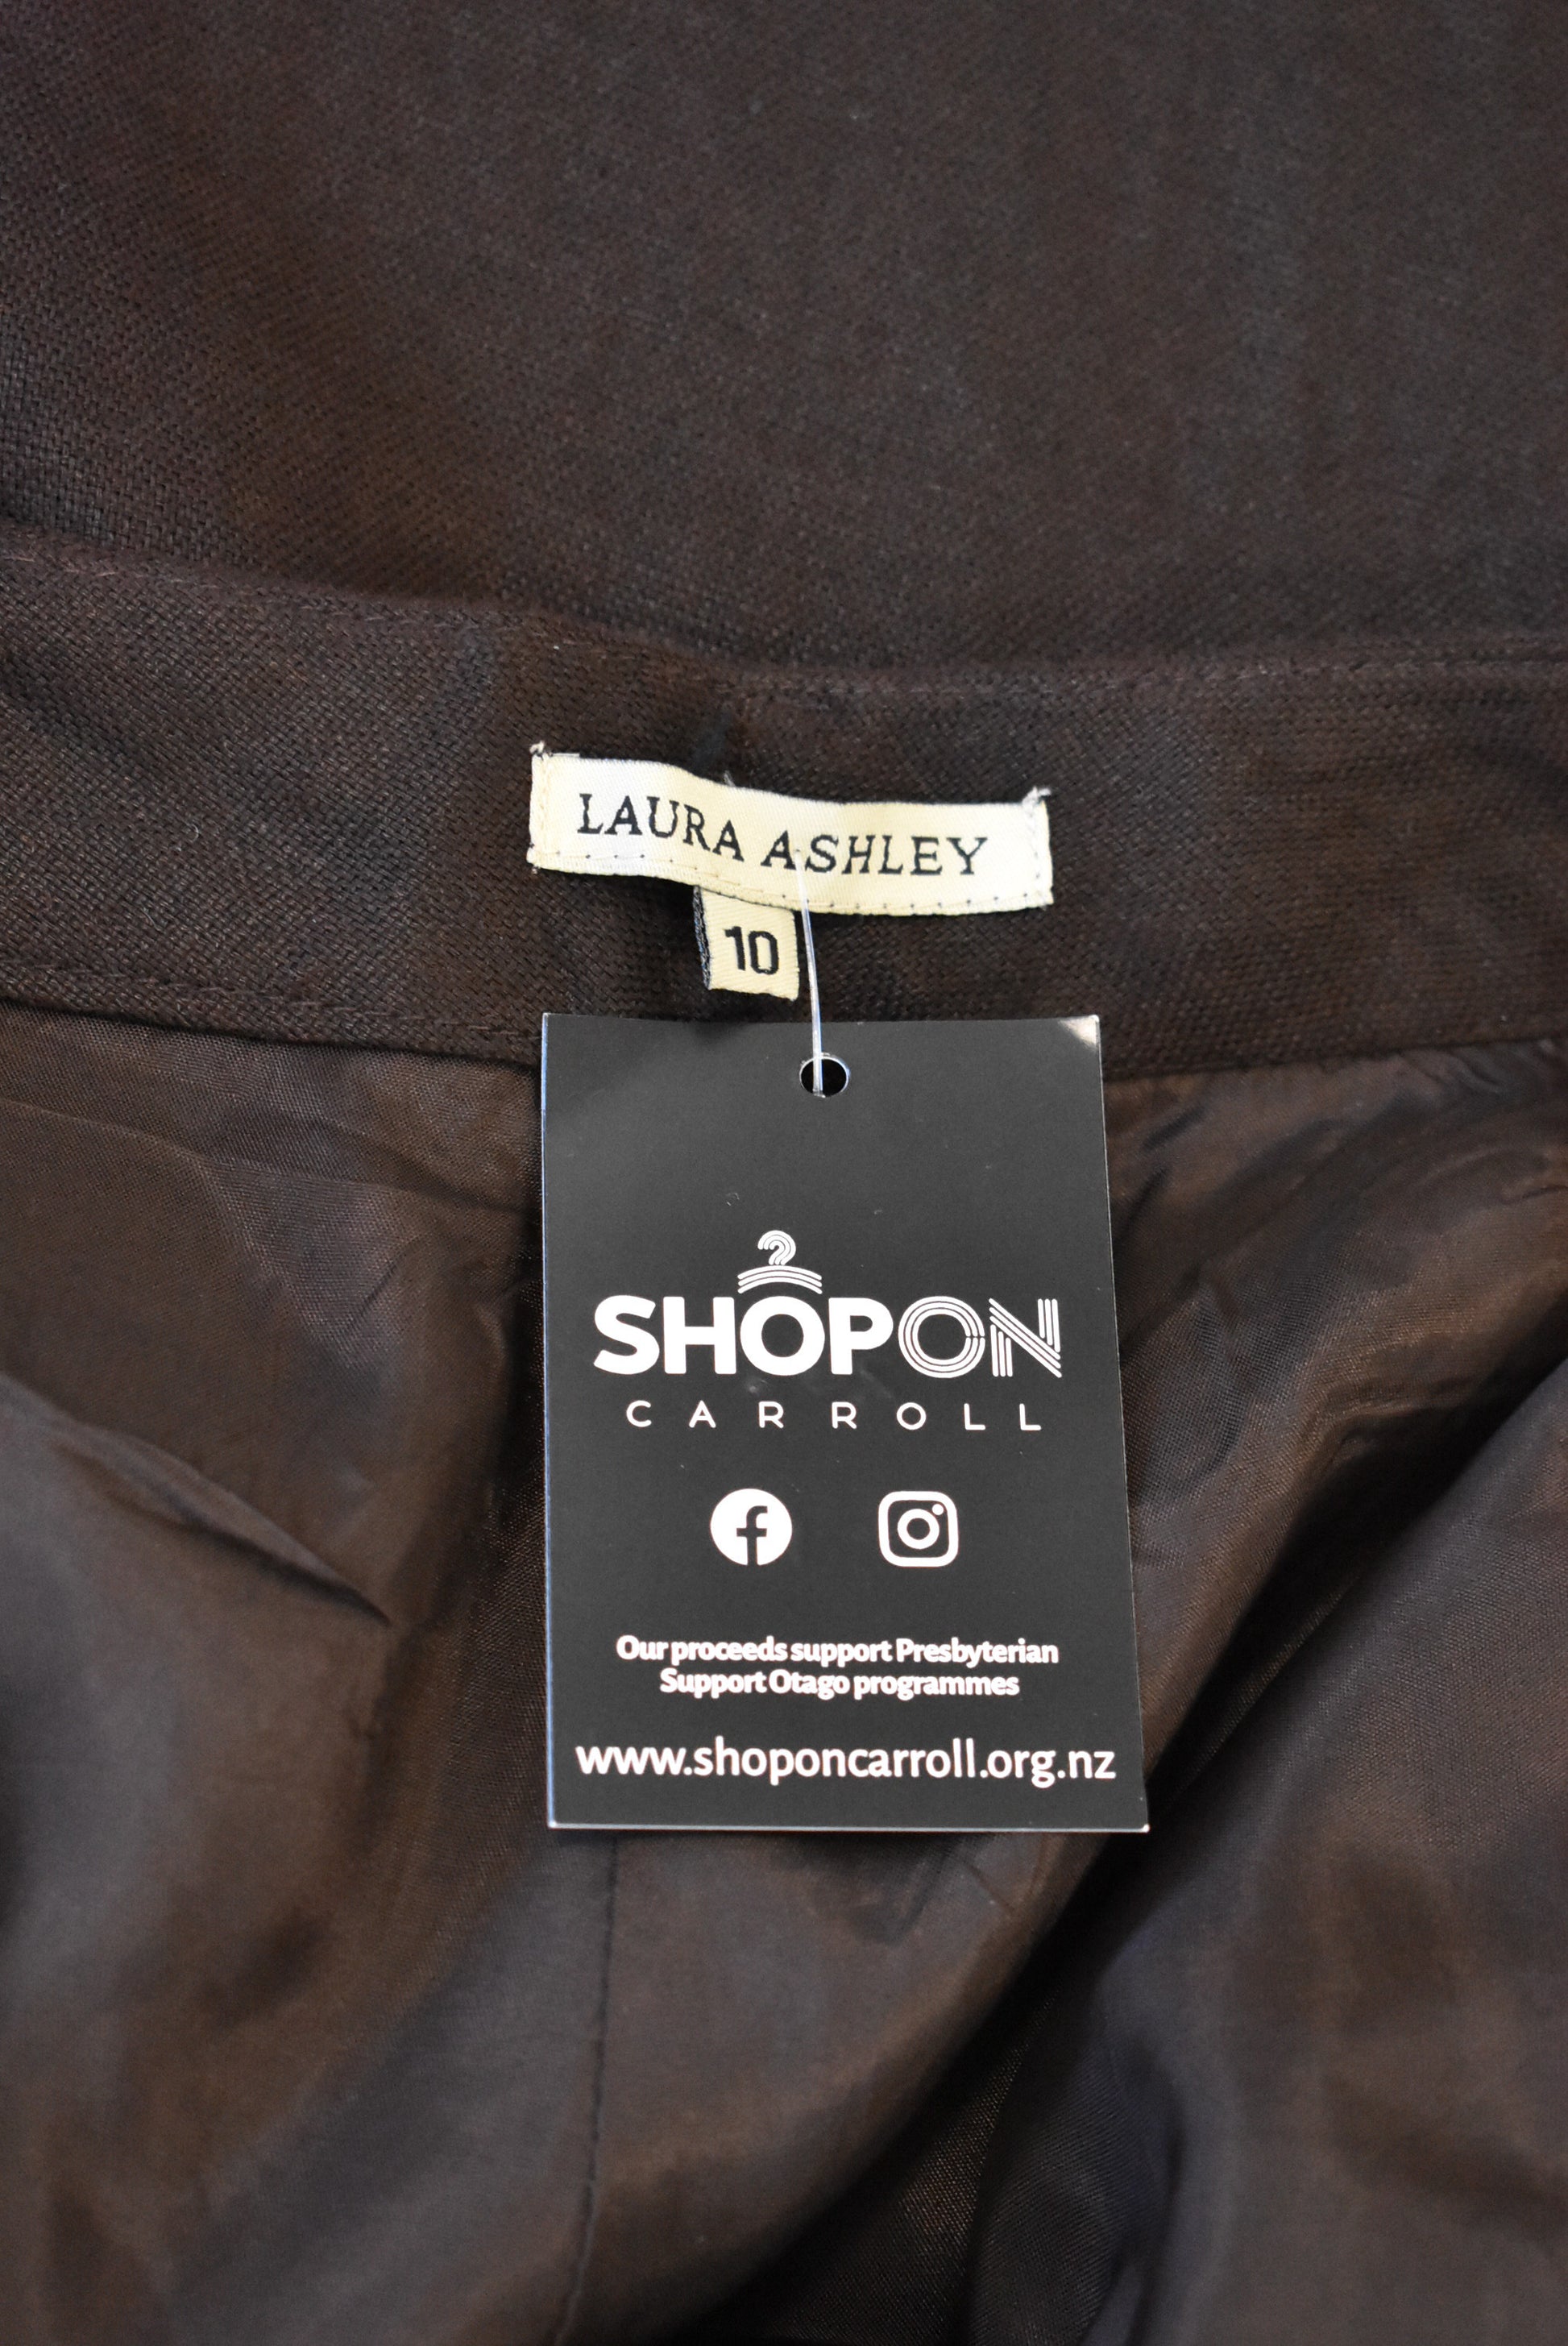 OH3 linen capri pants, 14 – Shop on Carroll Online